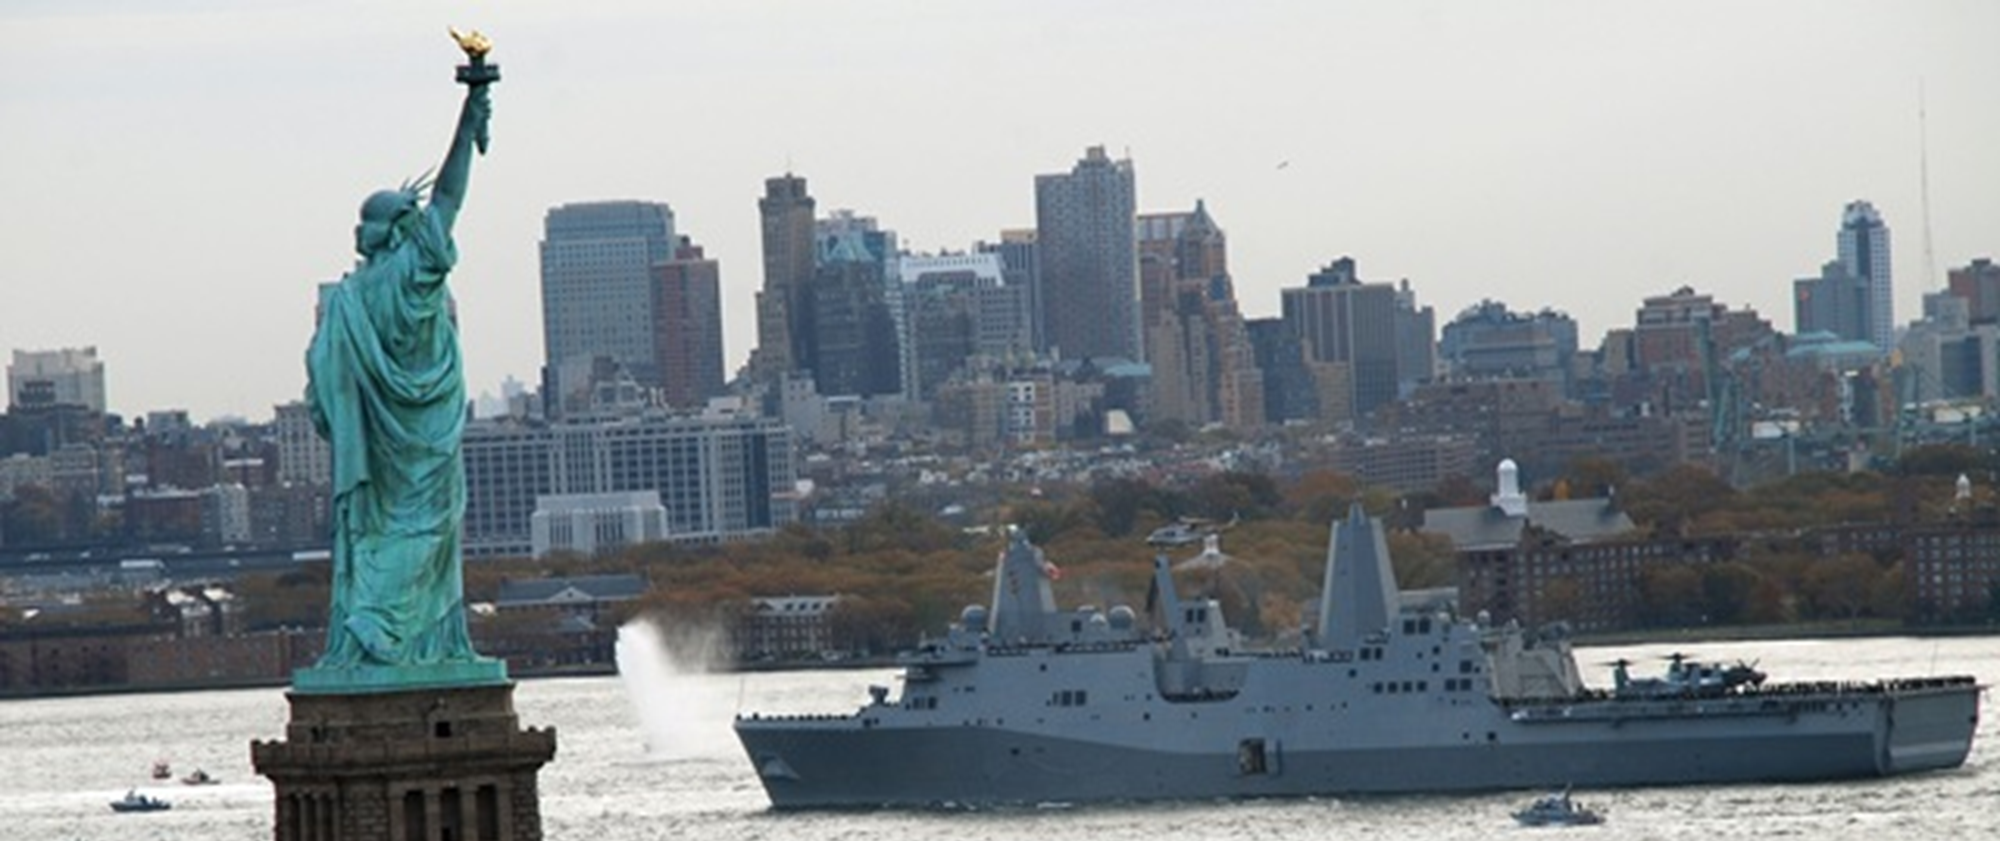 Navy ship sailing past stature of liberty